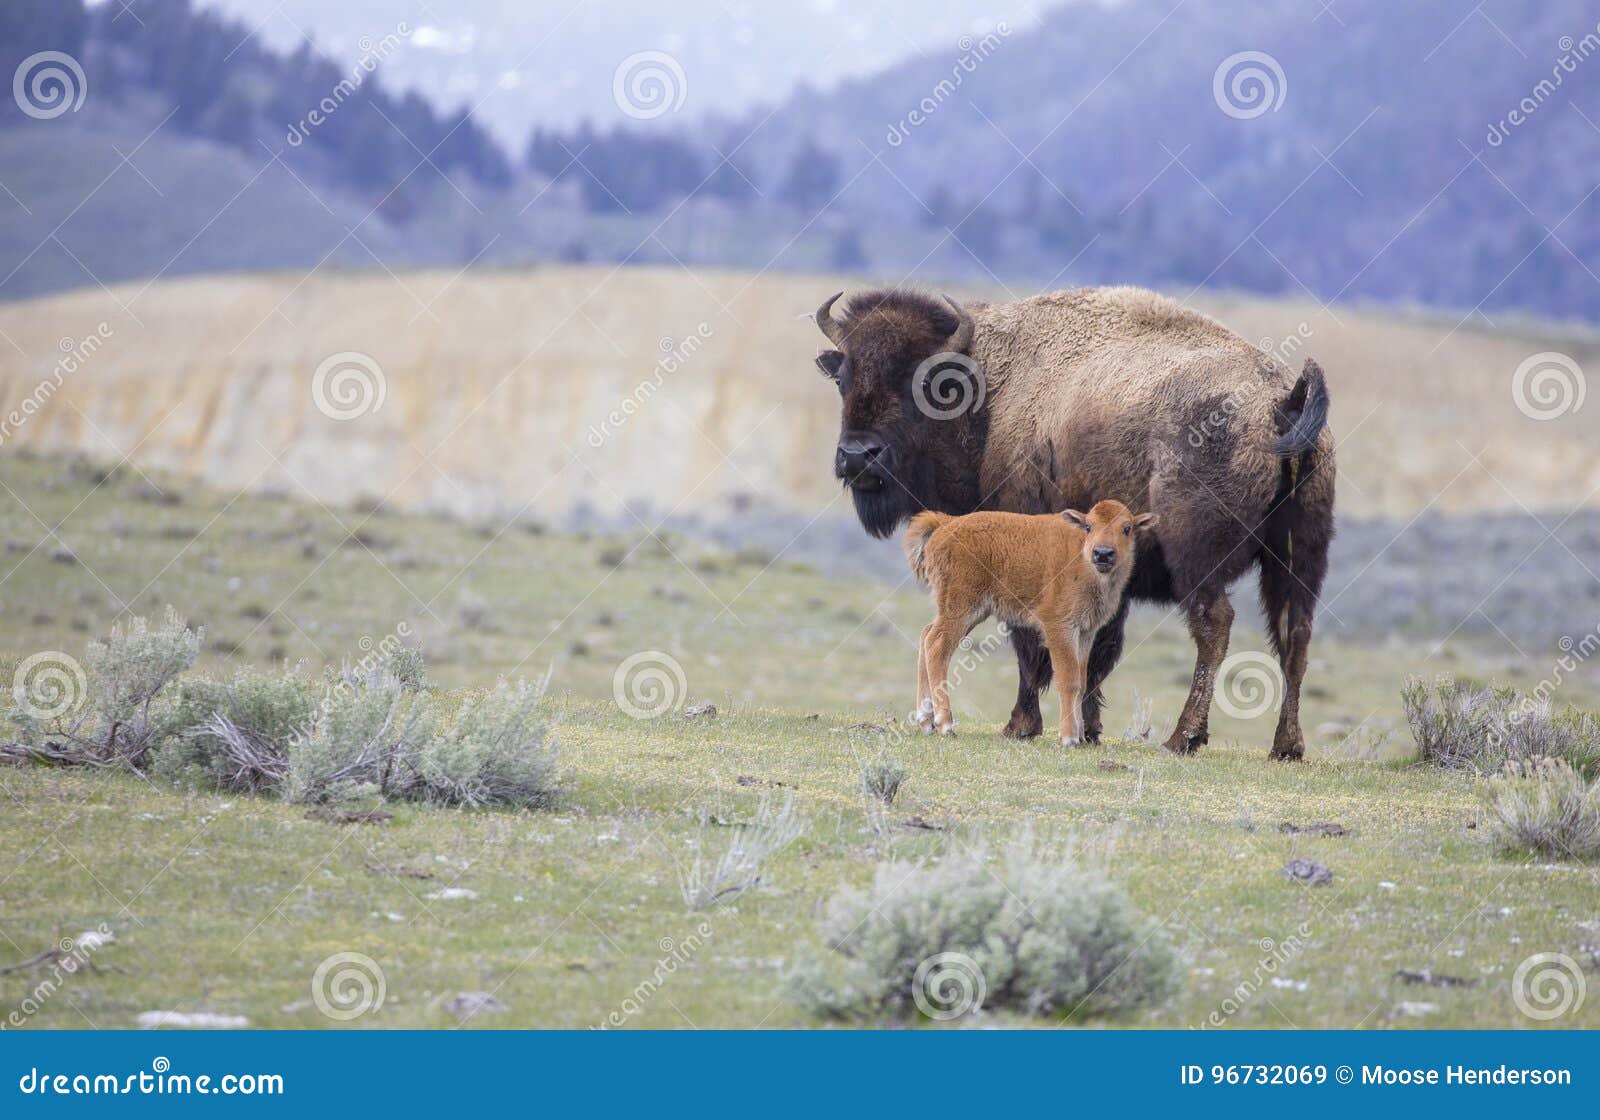 red dog bison calf and mother on open sagebrush grassland